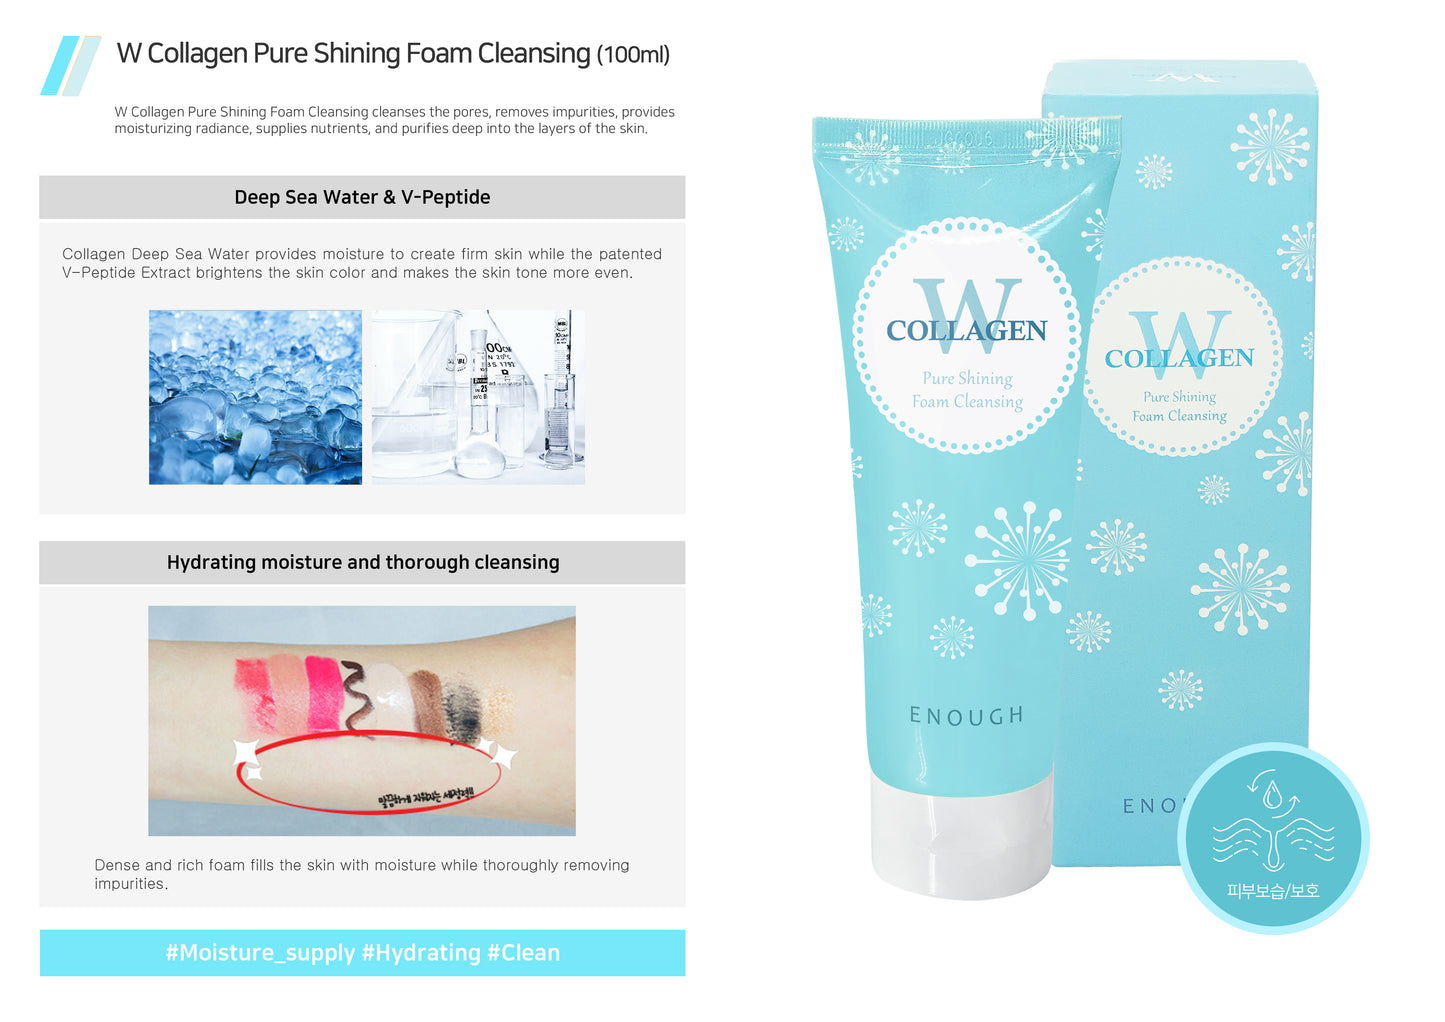 ENOUGH W Collagen Pure Shining Foam Cleansing (100gr)